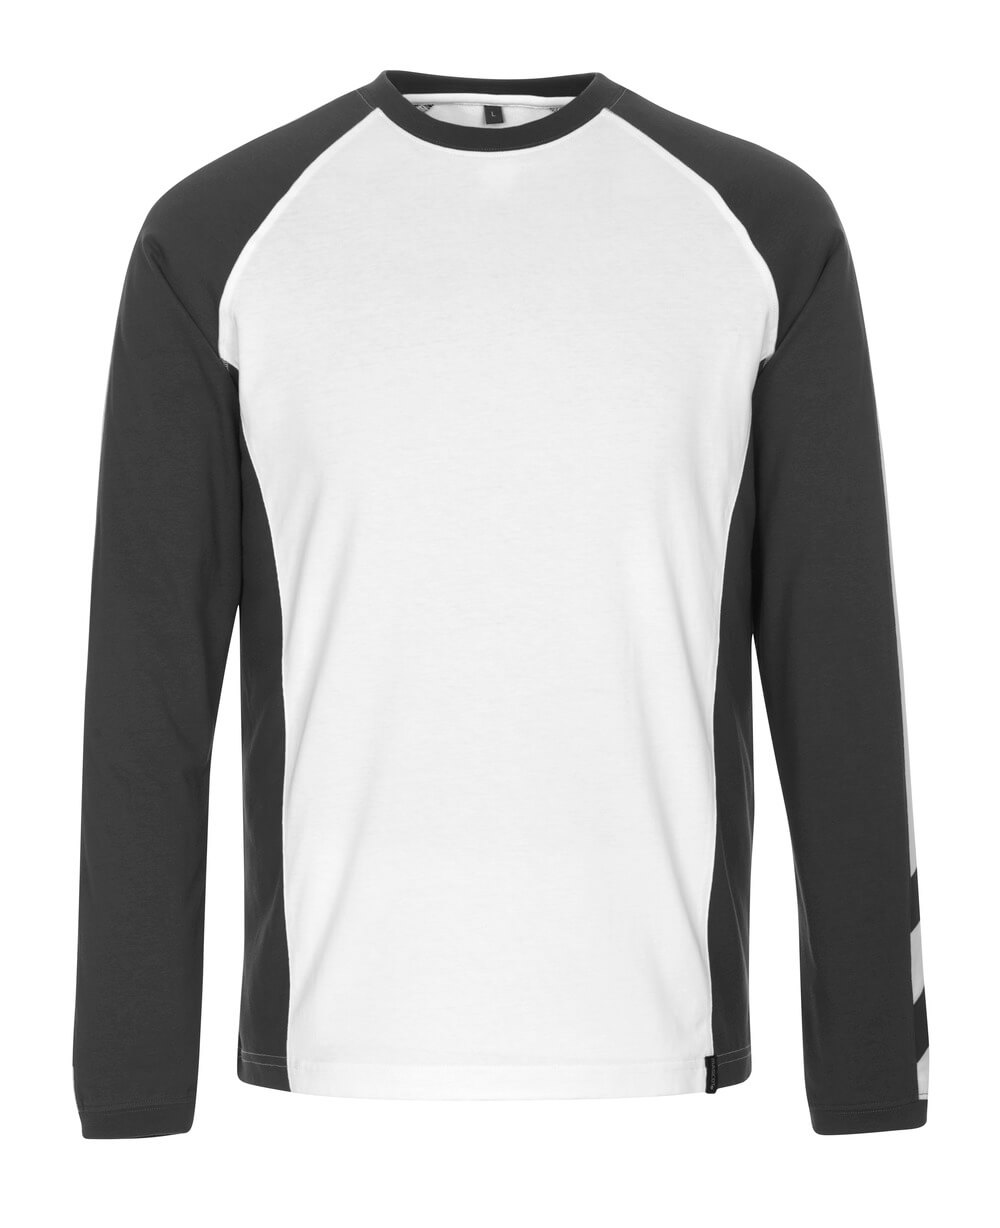 Mascot UNIQUE  Bielefeld T-shirt, long-sleeved 50568 white/dark anthracite